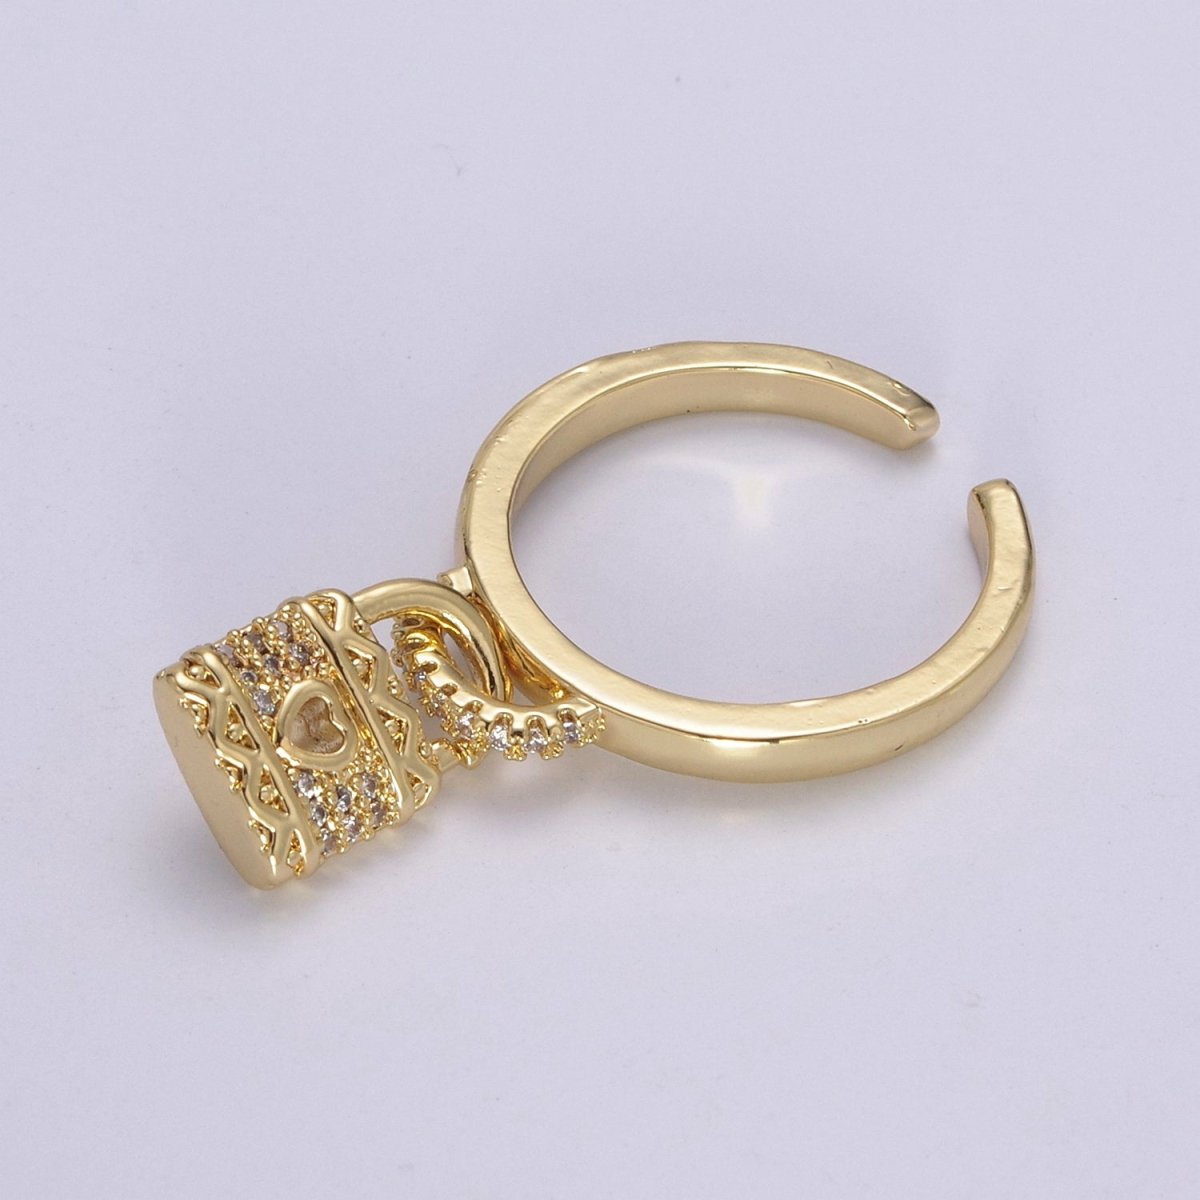 Silver / Gold Love Lock Ring Cuff Open Ring Adjustable Women Padlock Jewelry U-213 U-214 - DLUXCA